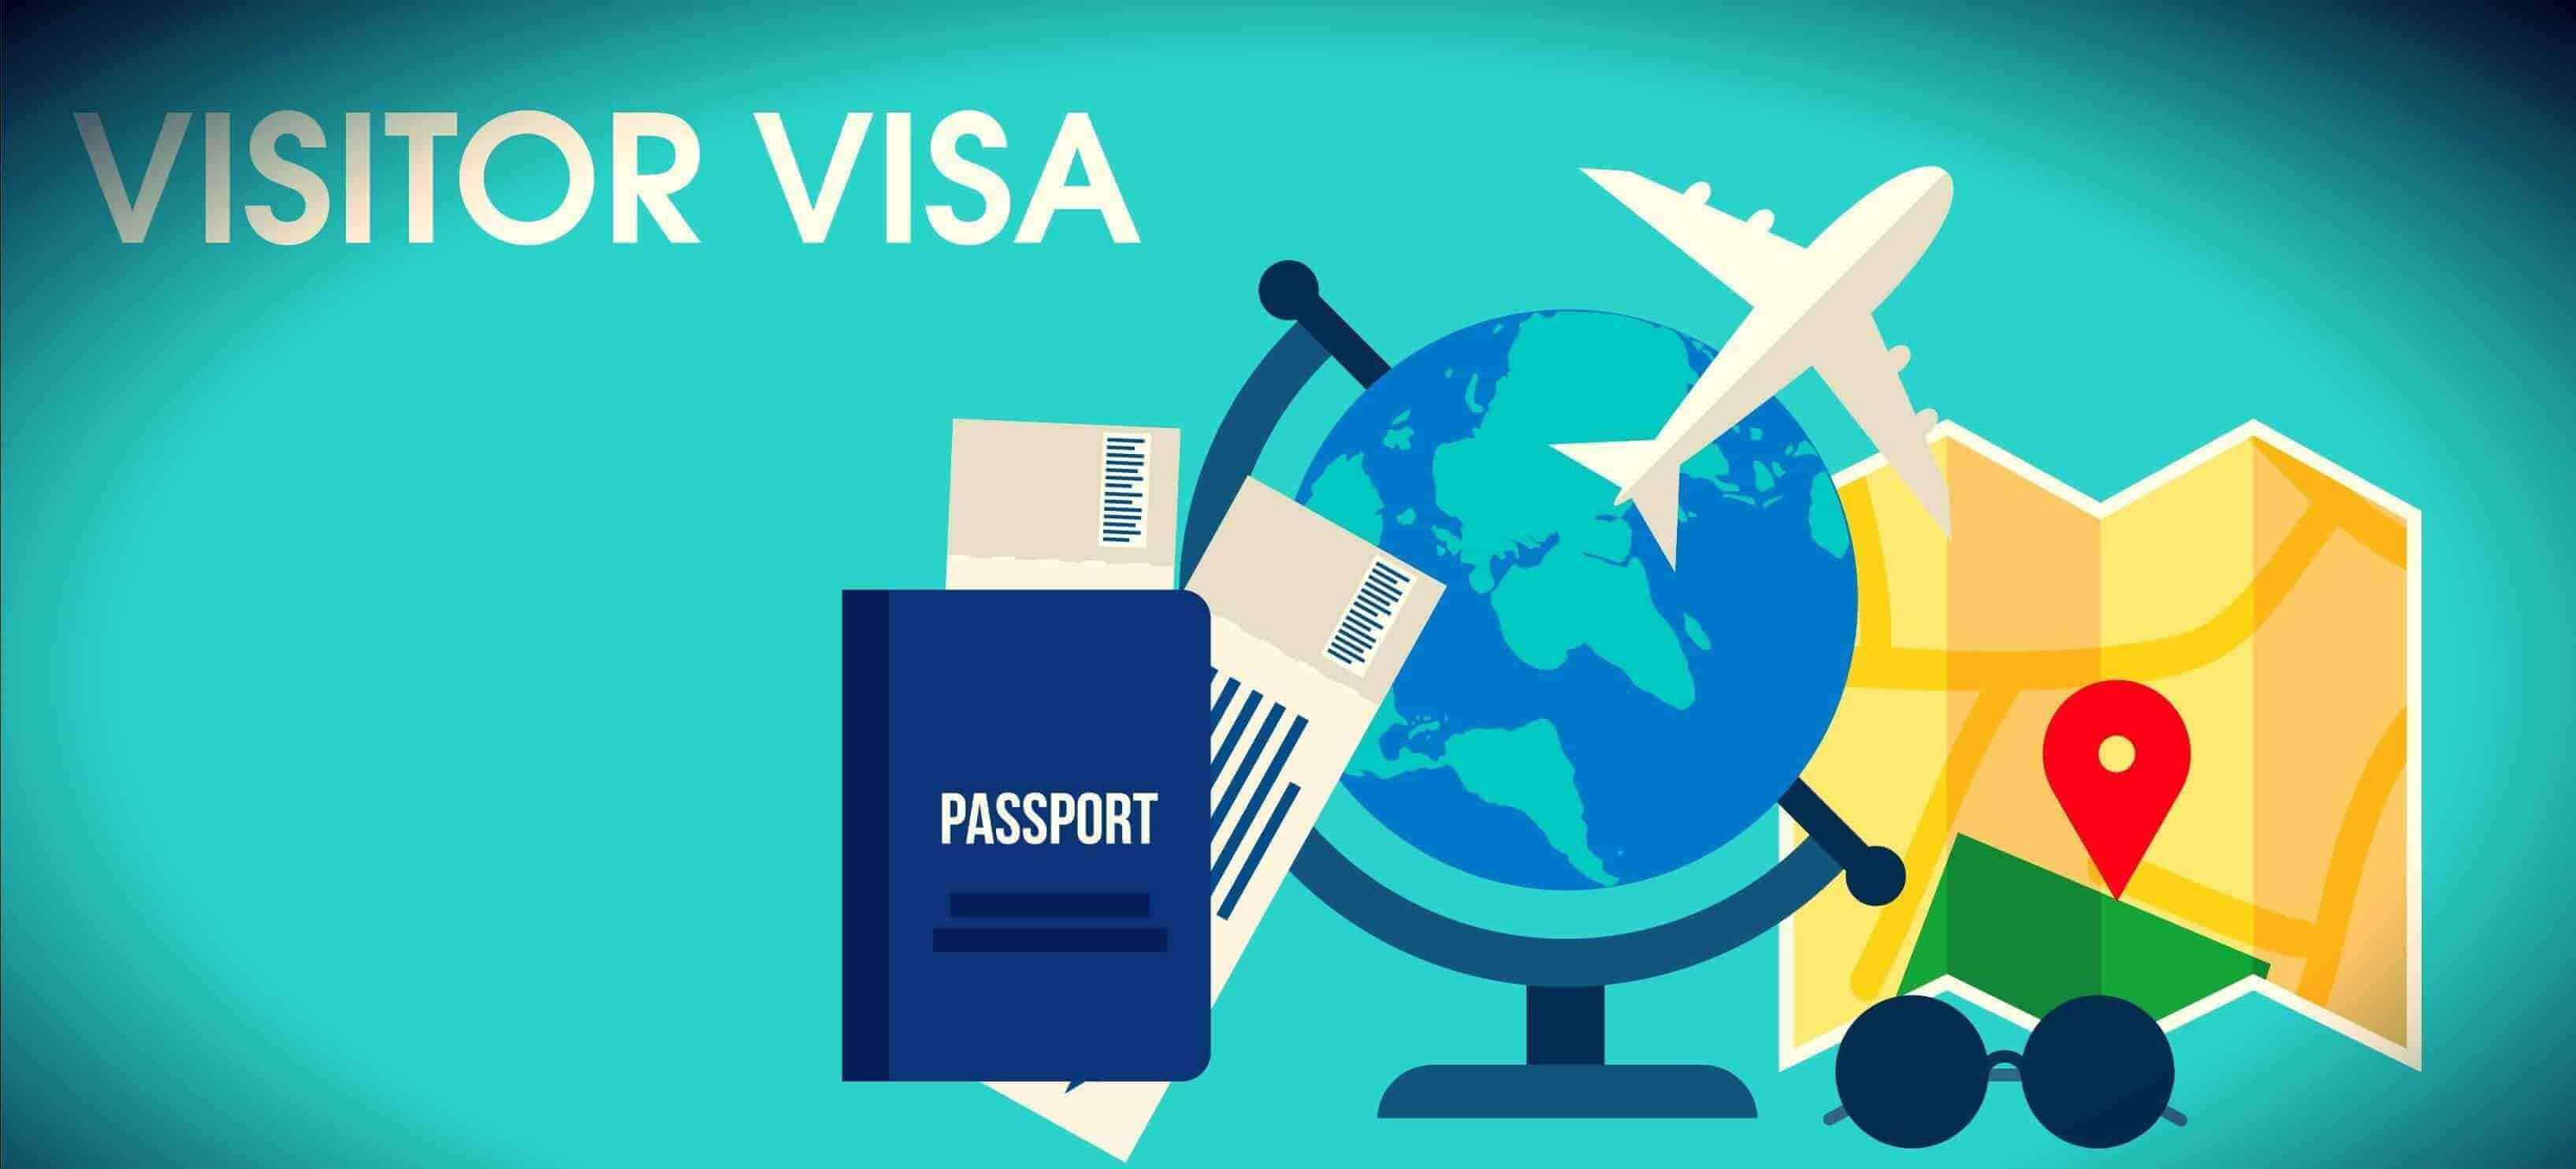 Temporary Resident Visa Canada | Applying For Visitor Visa Canada